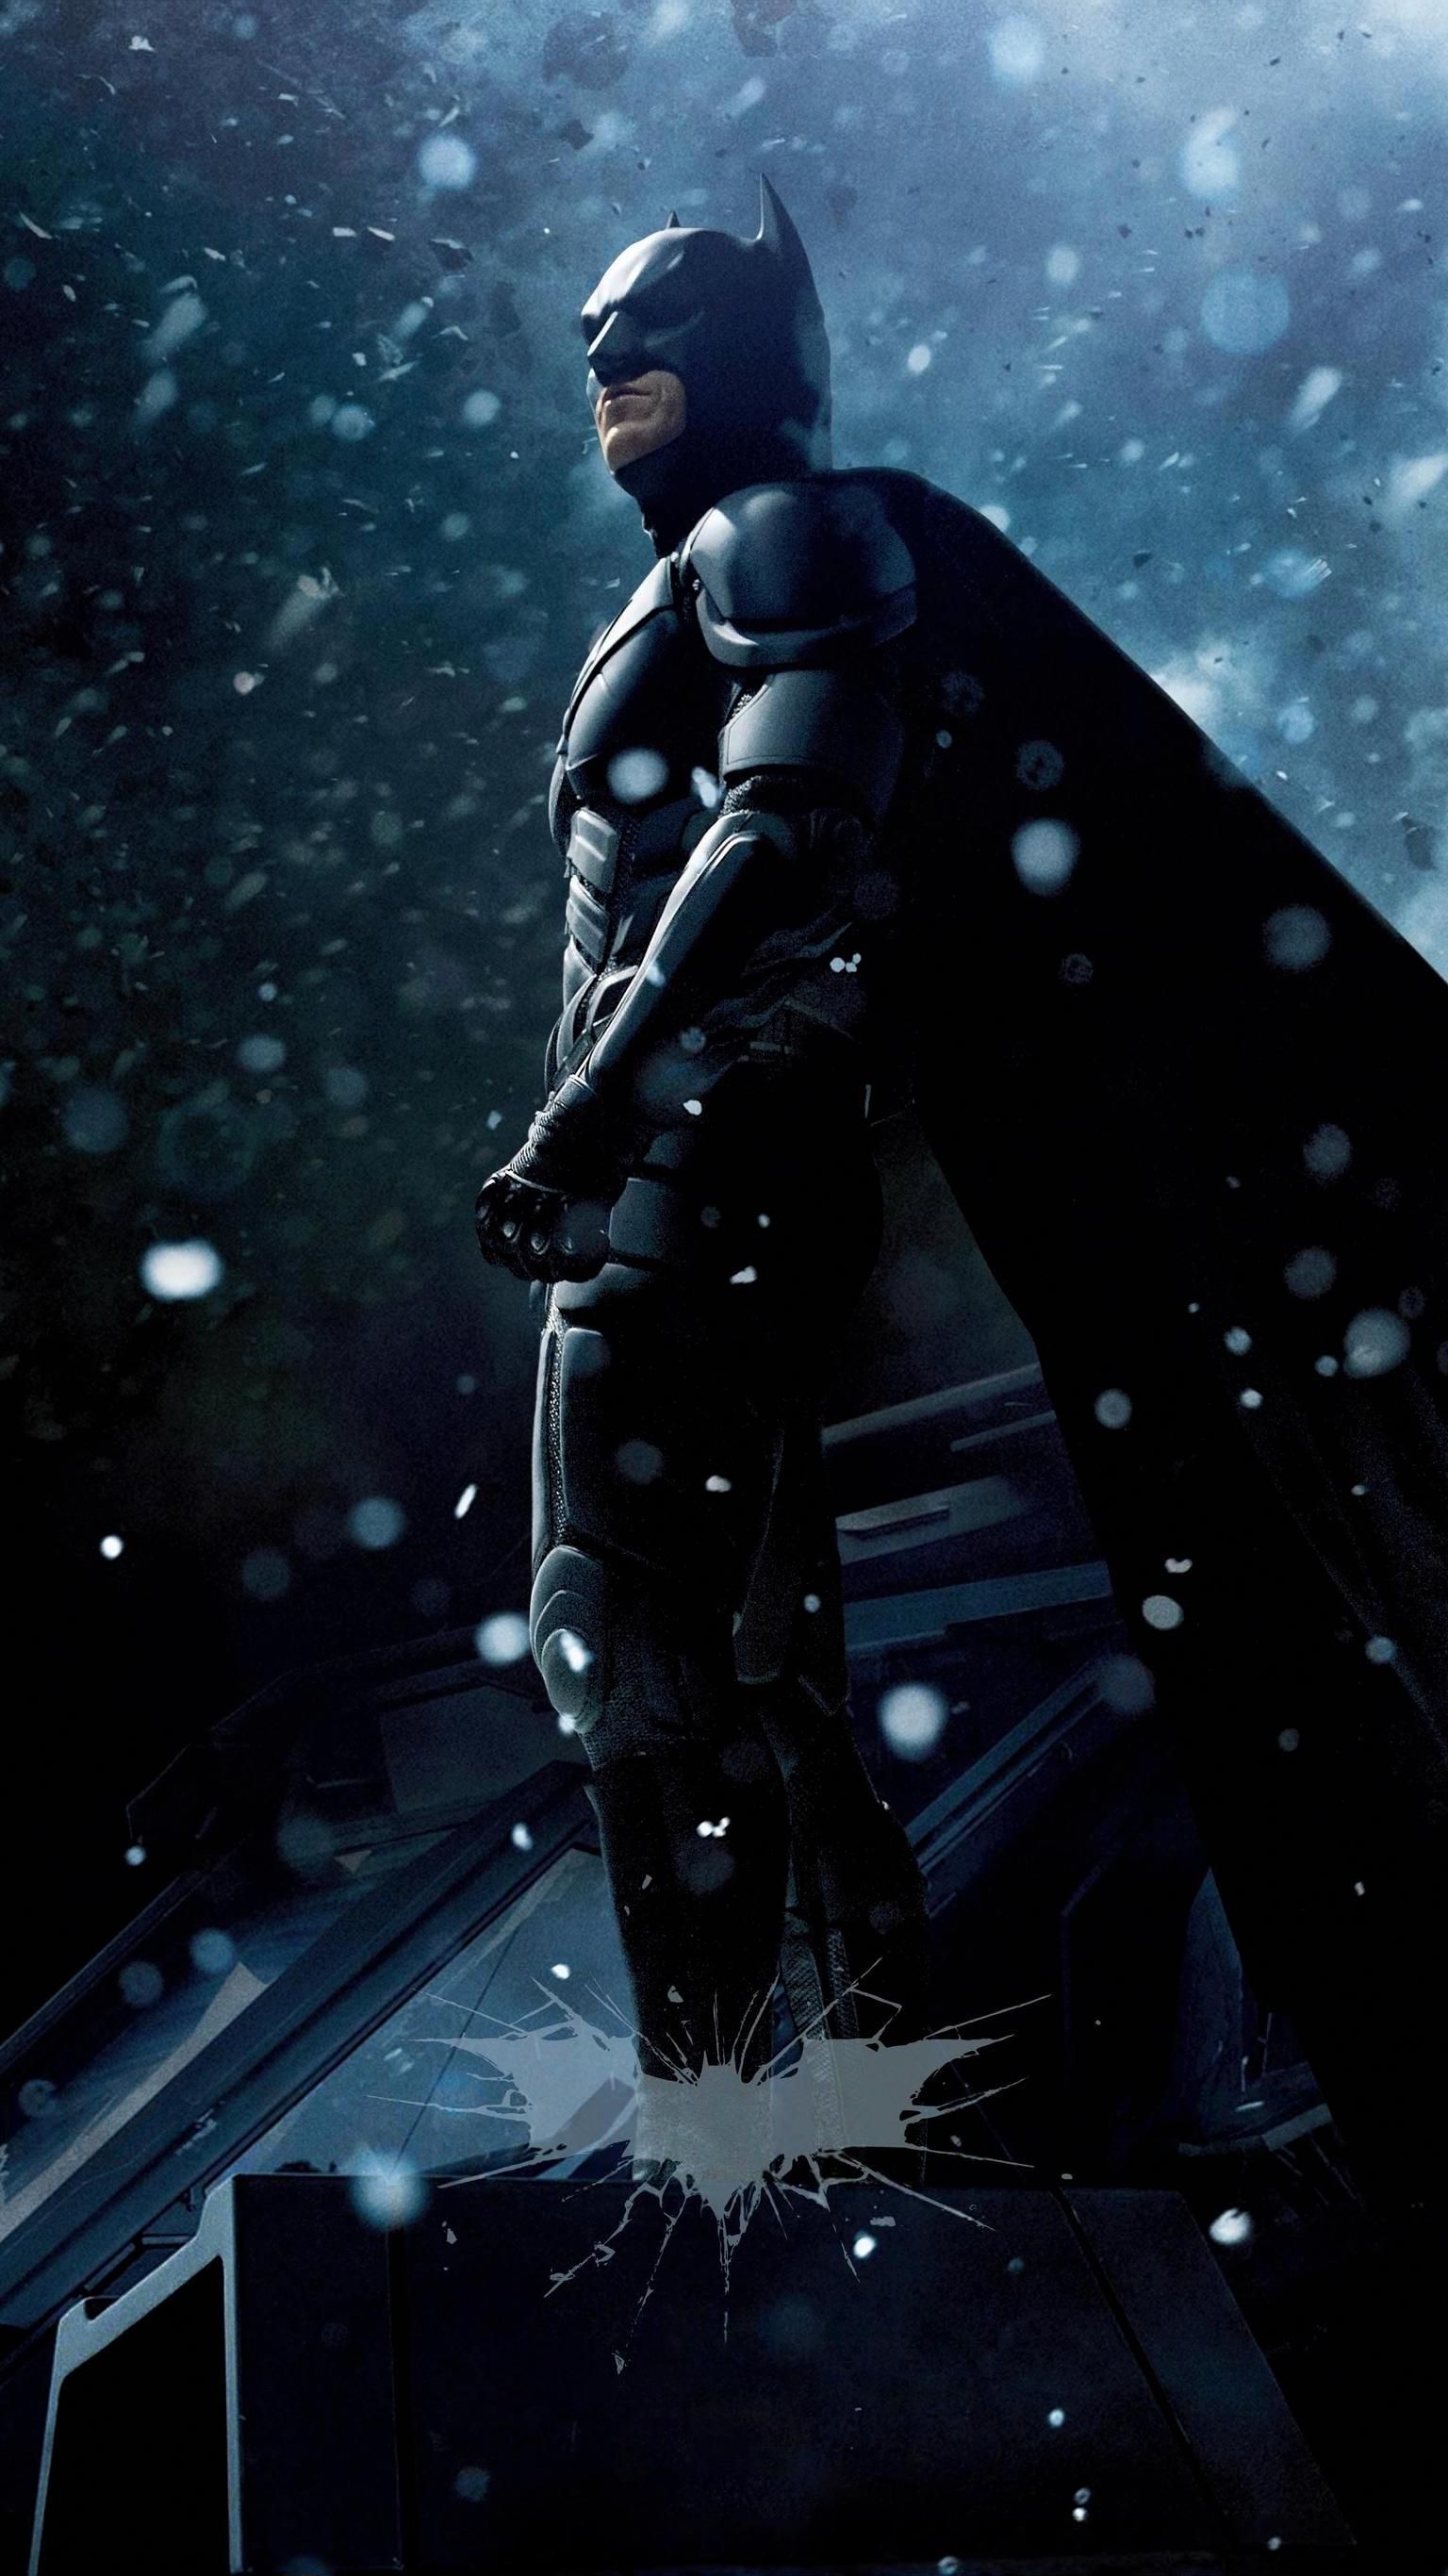 The Dark Knight Rises (2012) Phone Wallpaper. Moviemania. The dark knight rises, Dark knight, Batman movie